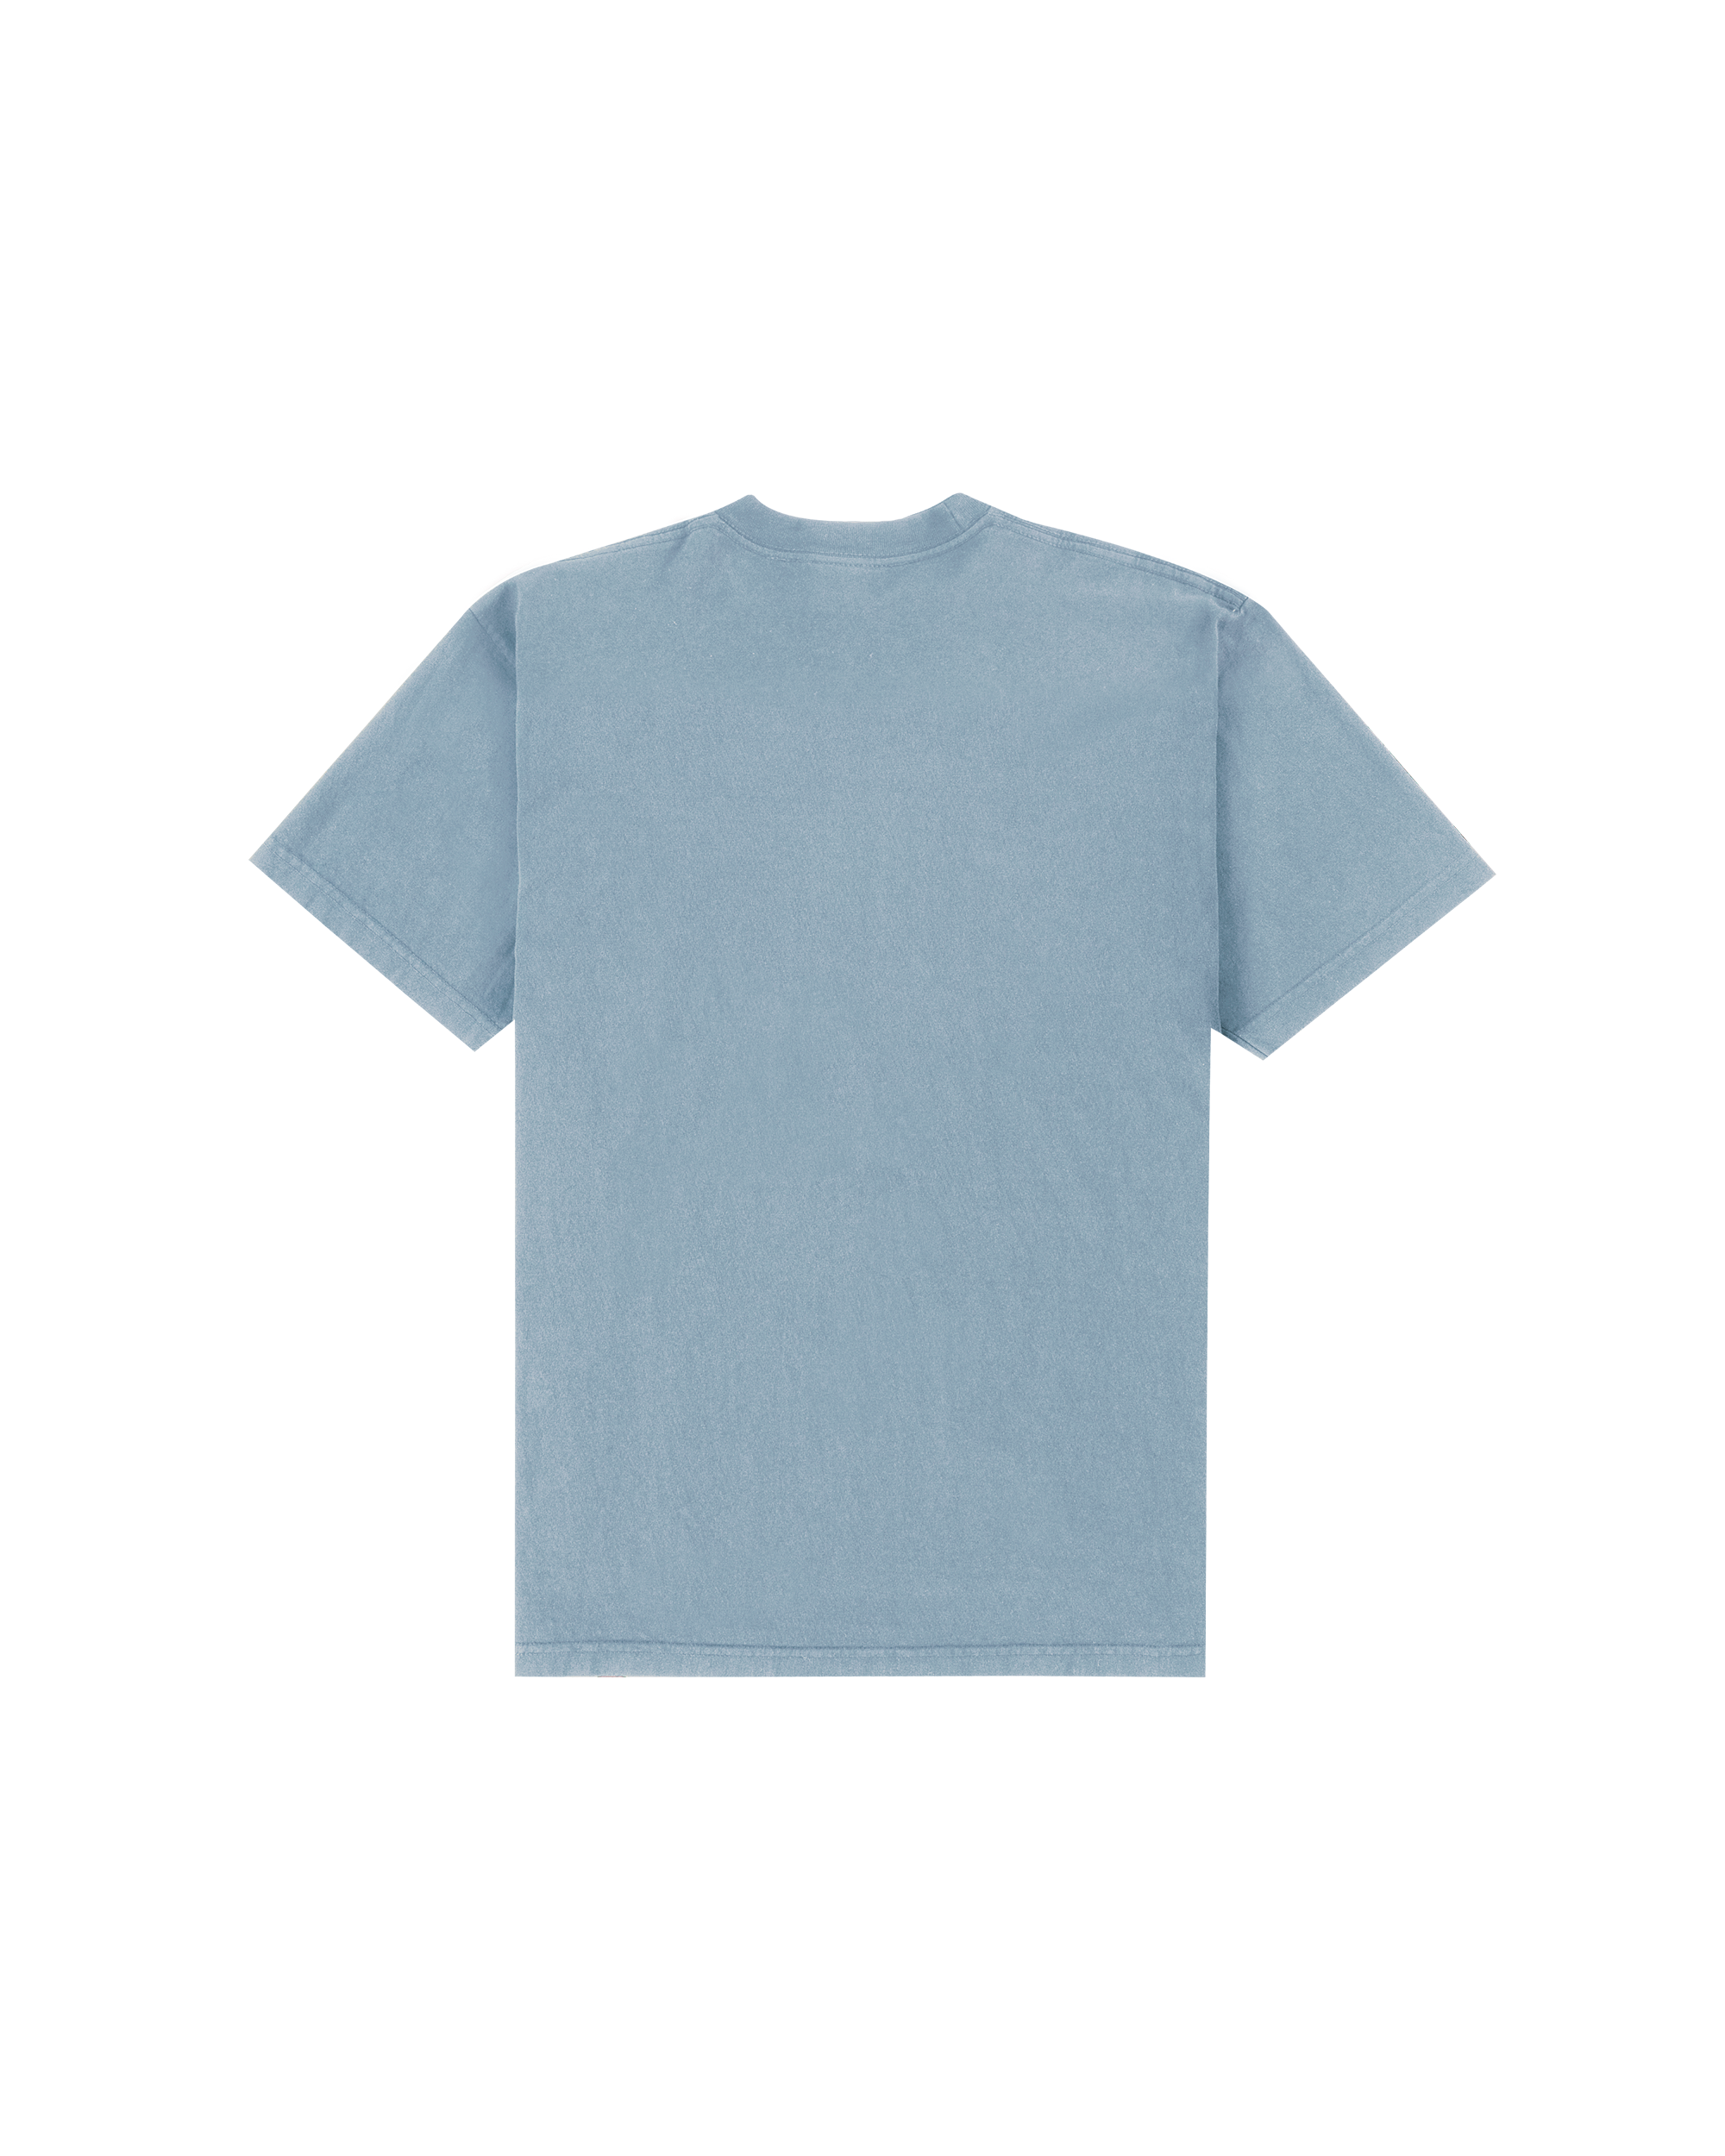 Flying High T-shirt - Clear Blue